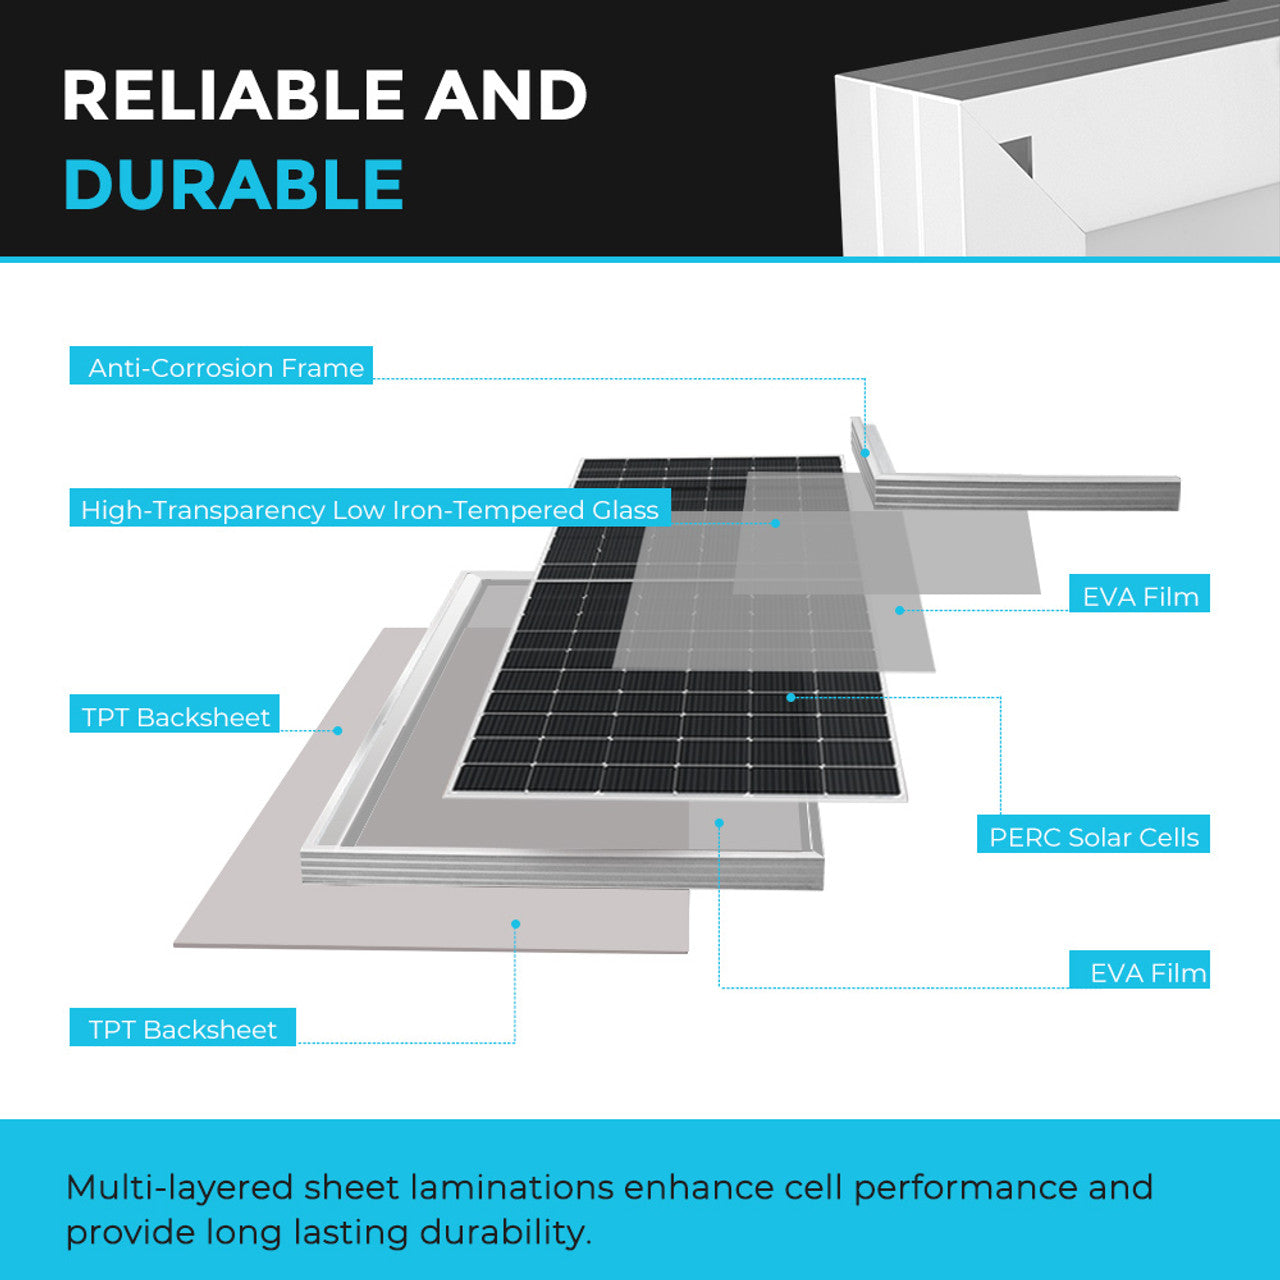 Renogy 450 Watt Monocrystalline Solar Panel, UL Certified